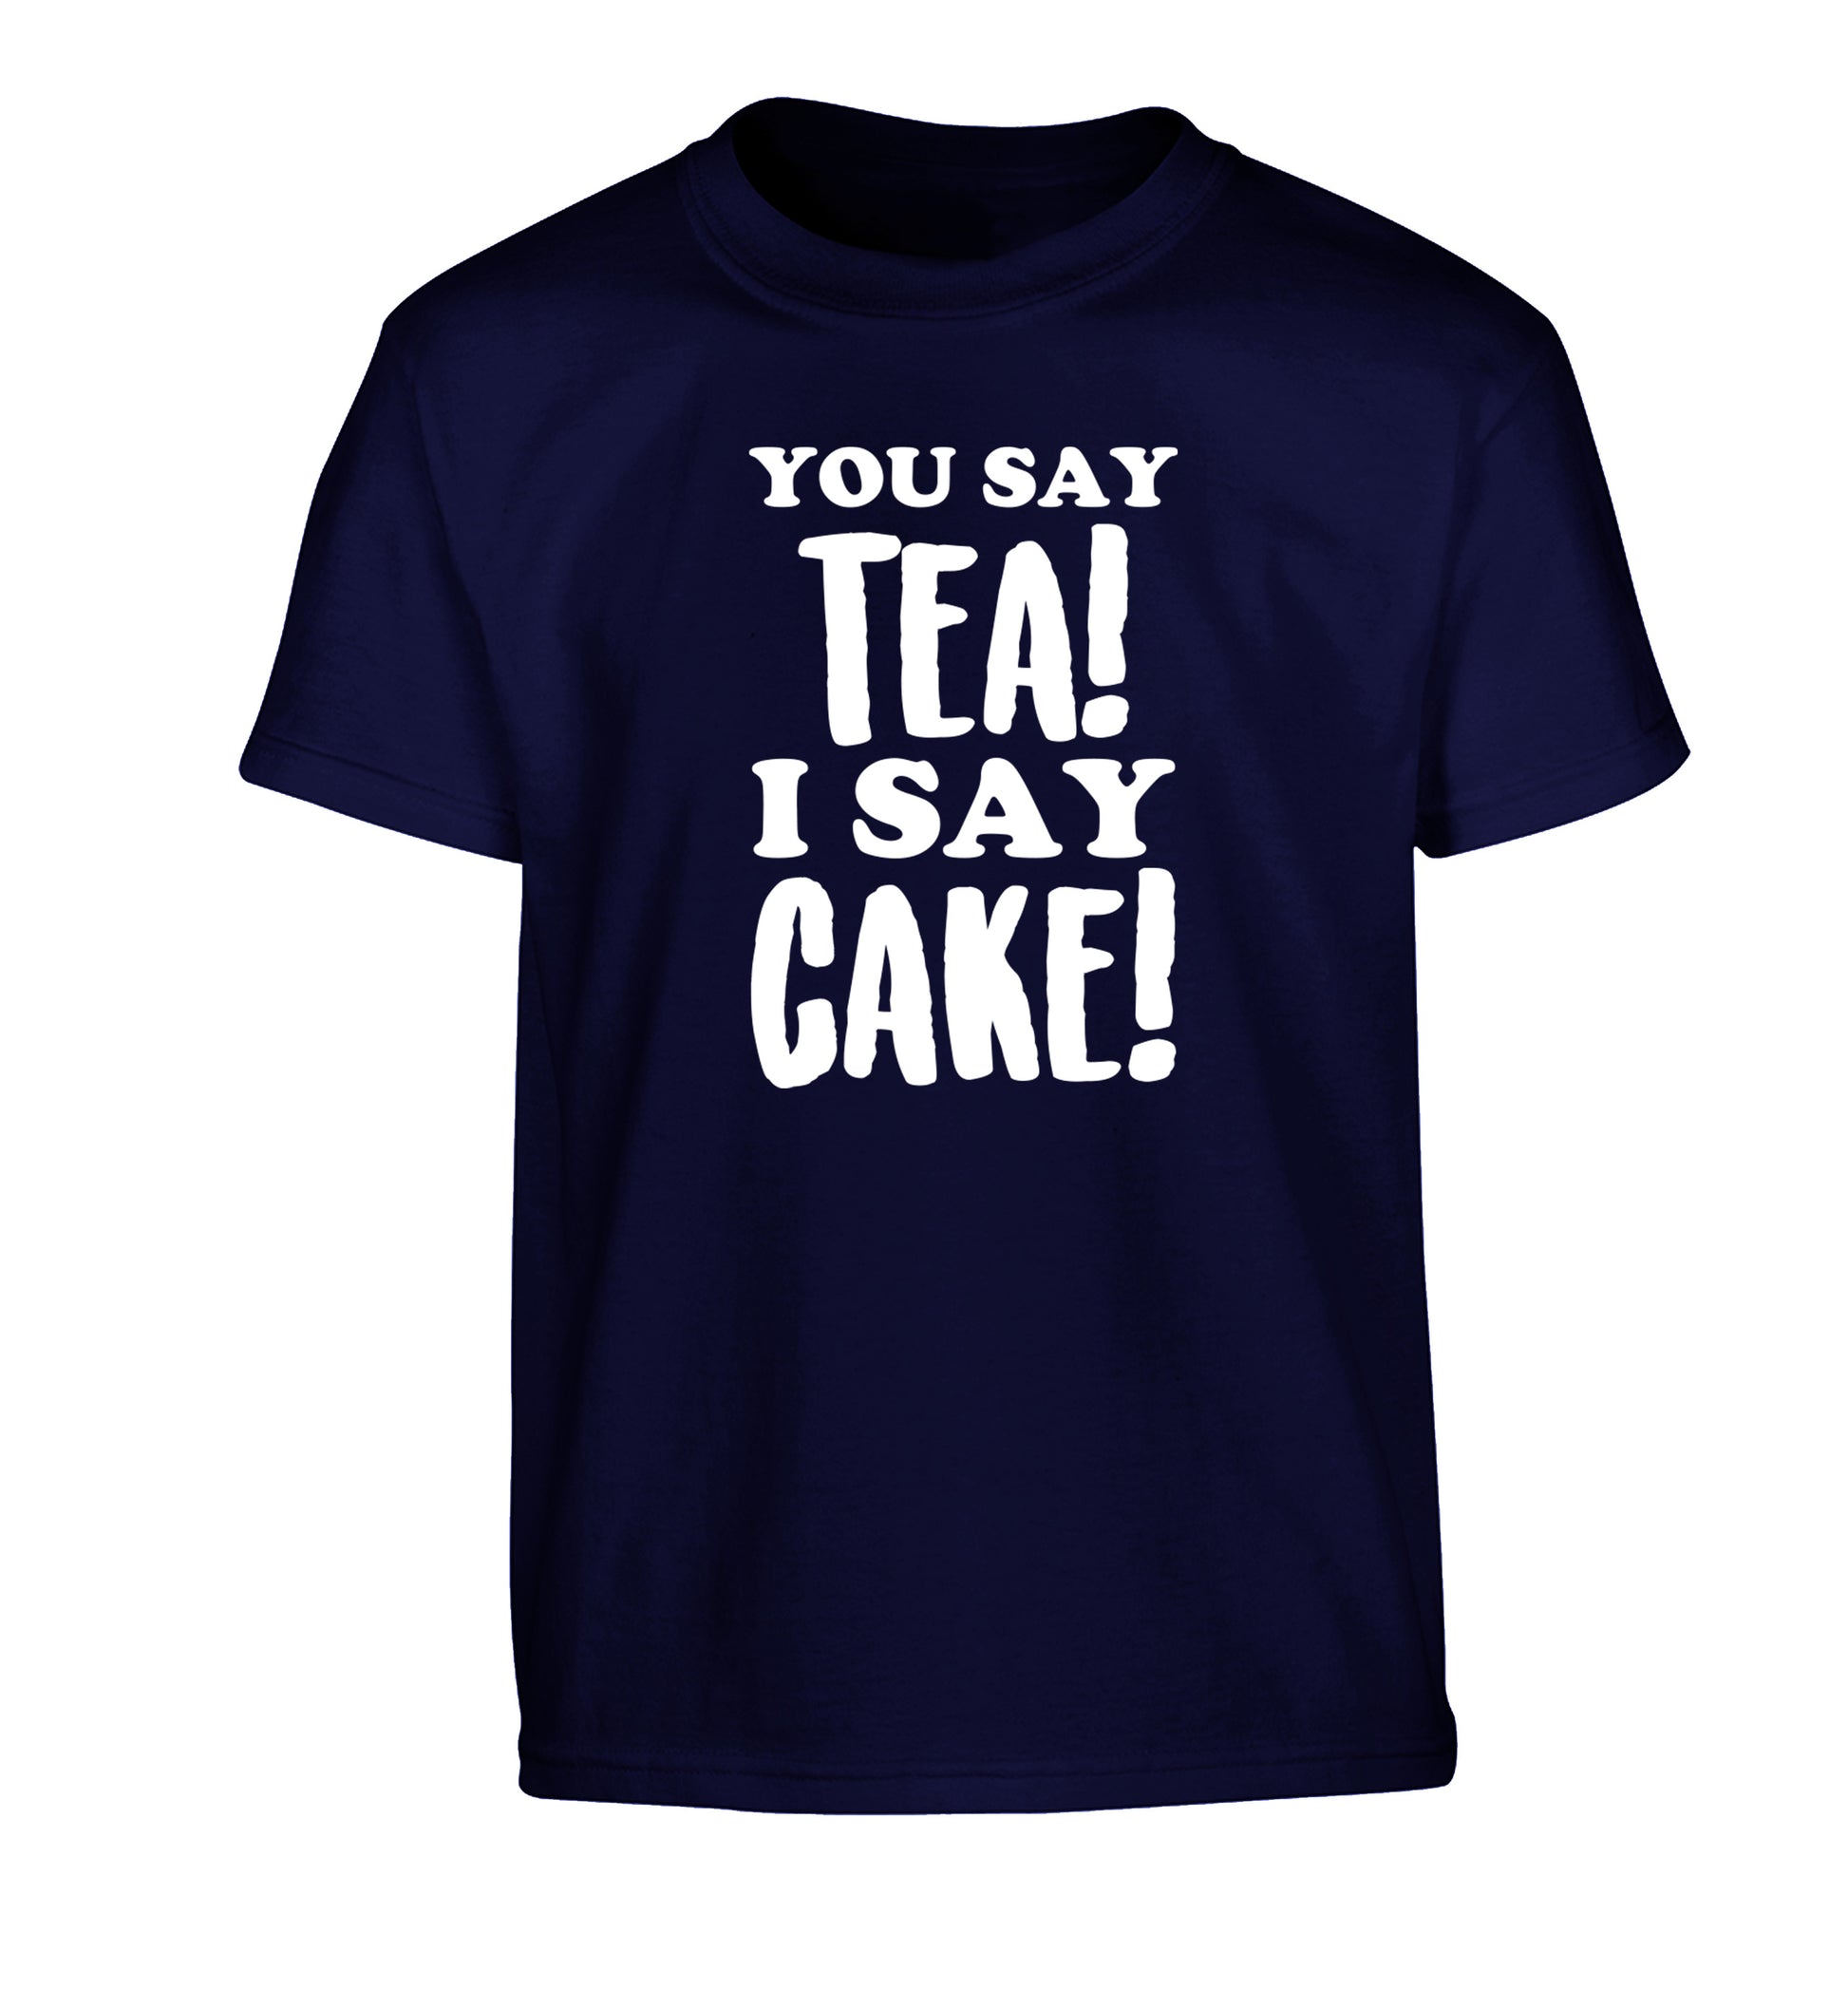 You say tea I say cake! Children's navy Tshirt 12-14 Years